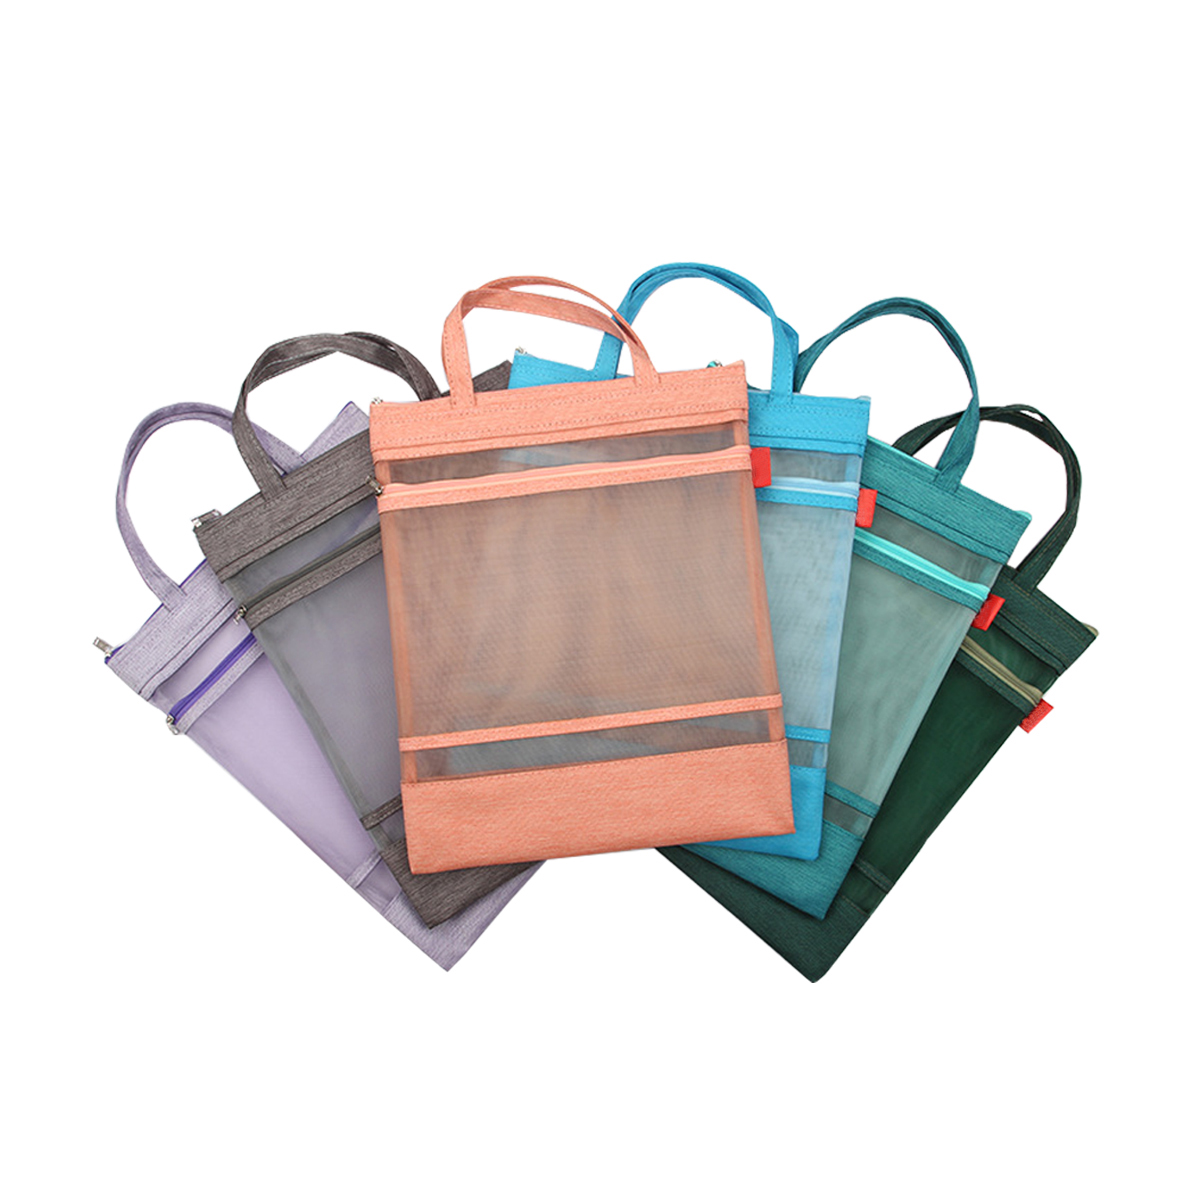 A4 vertical single layer tote bag/tutoring bag